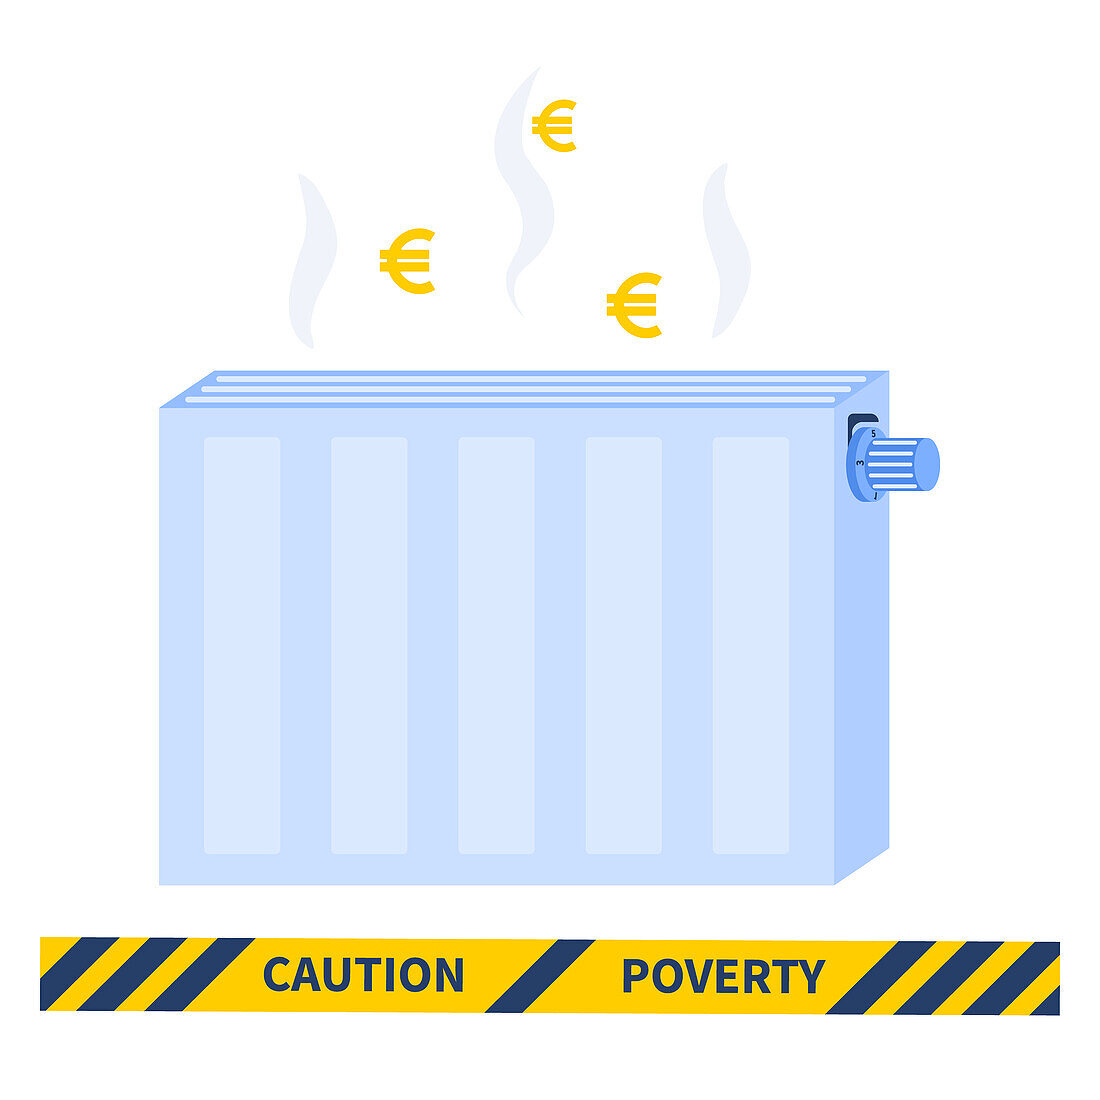 Fuel poverty, conceptual illustration